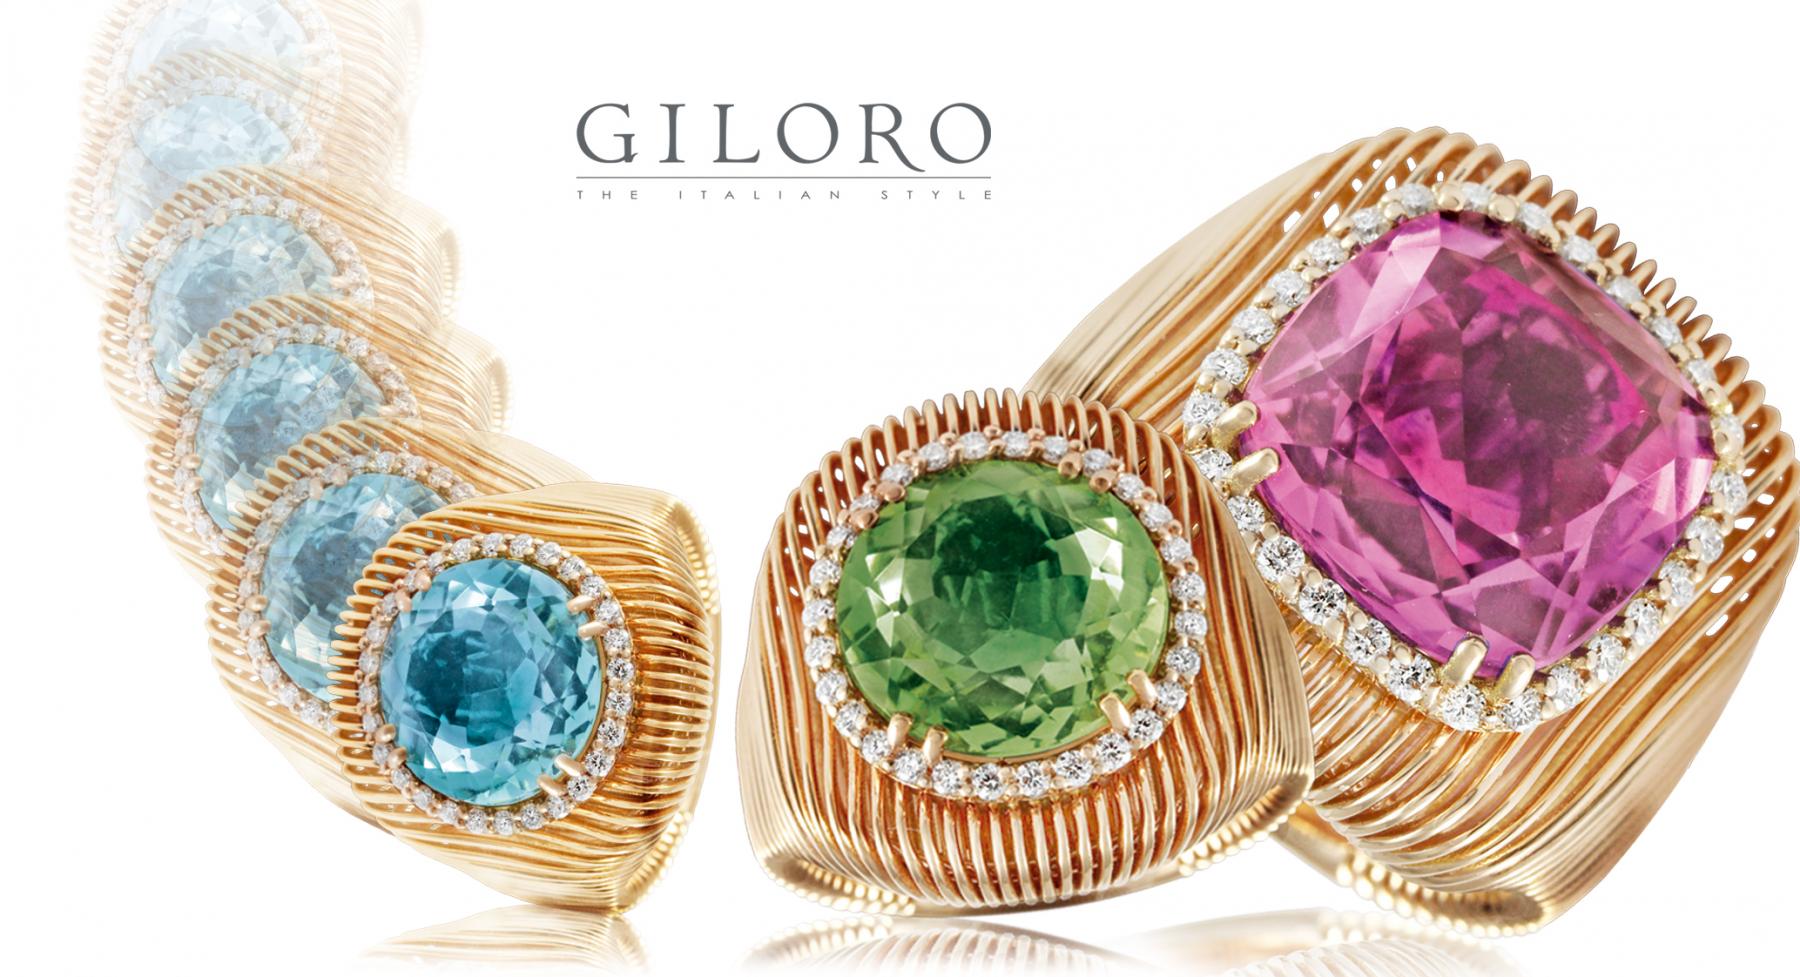 giloro gold jewelry